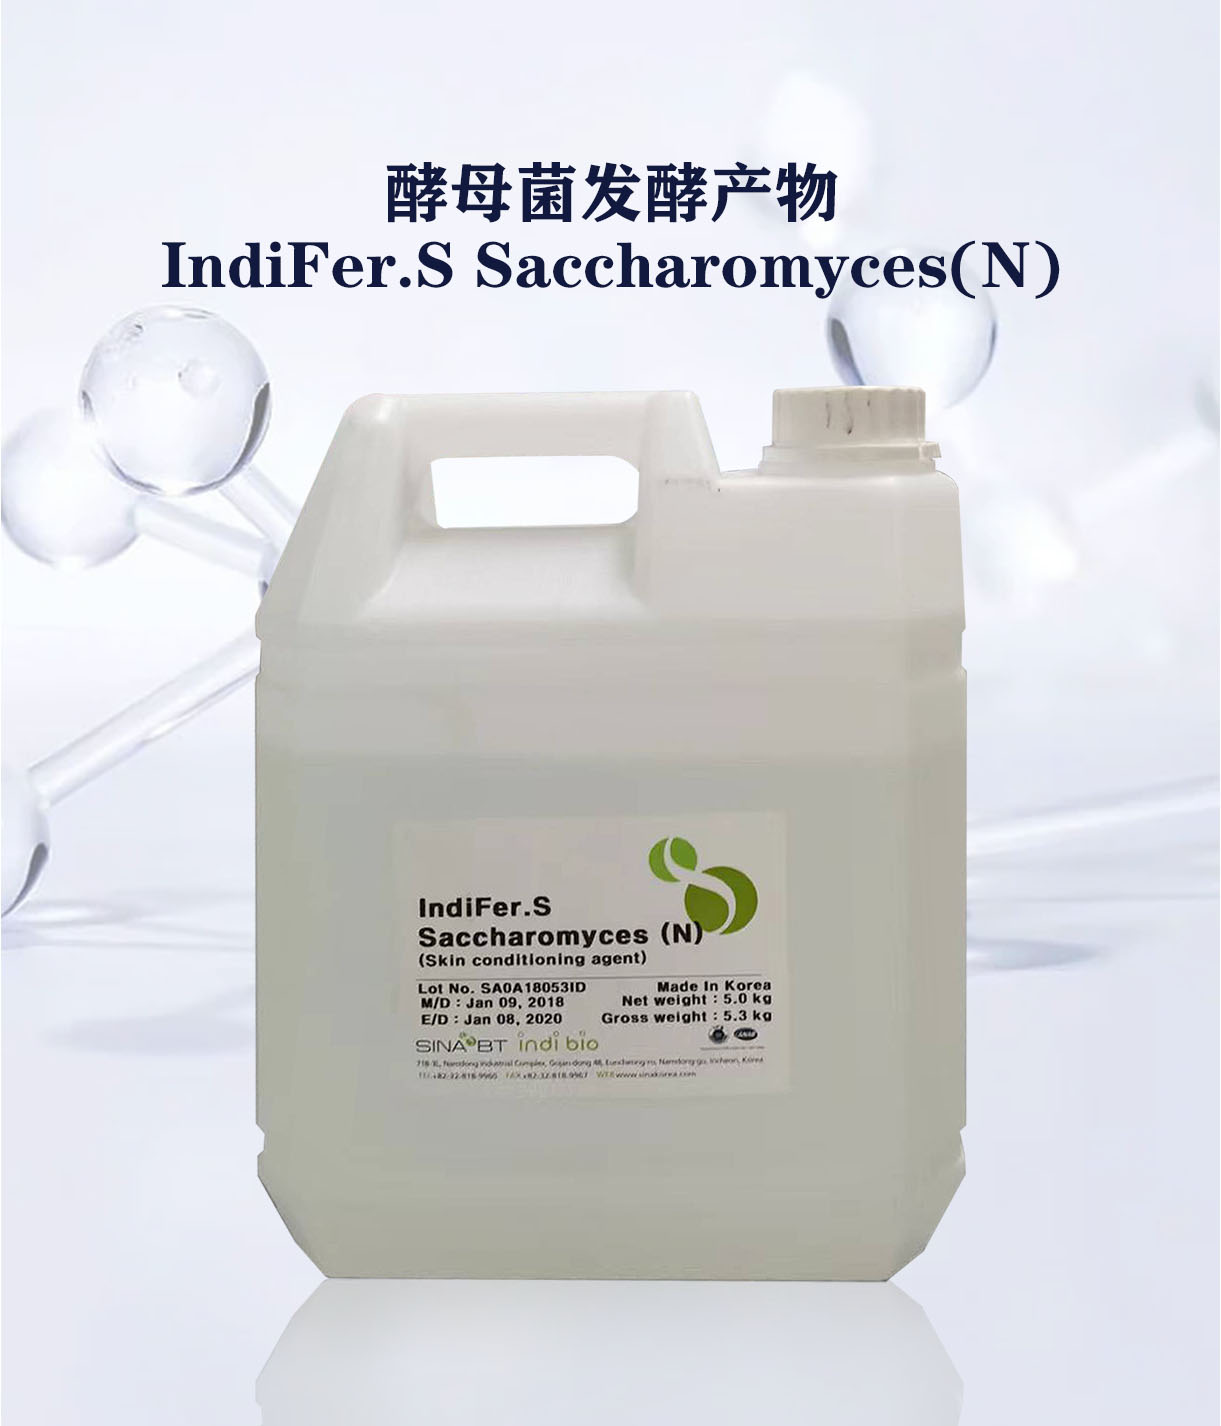 IndiFer.S Saccharomyces (N)